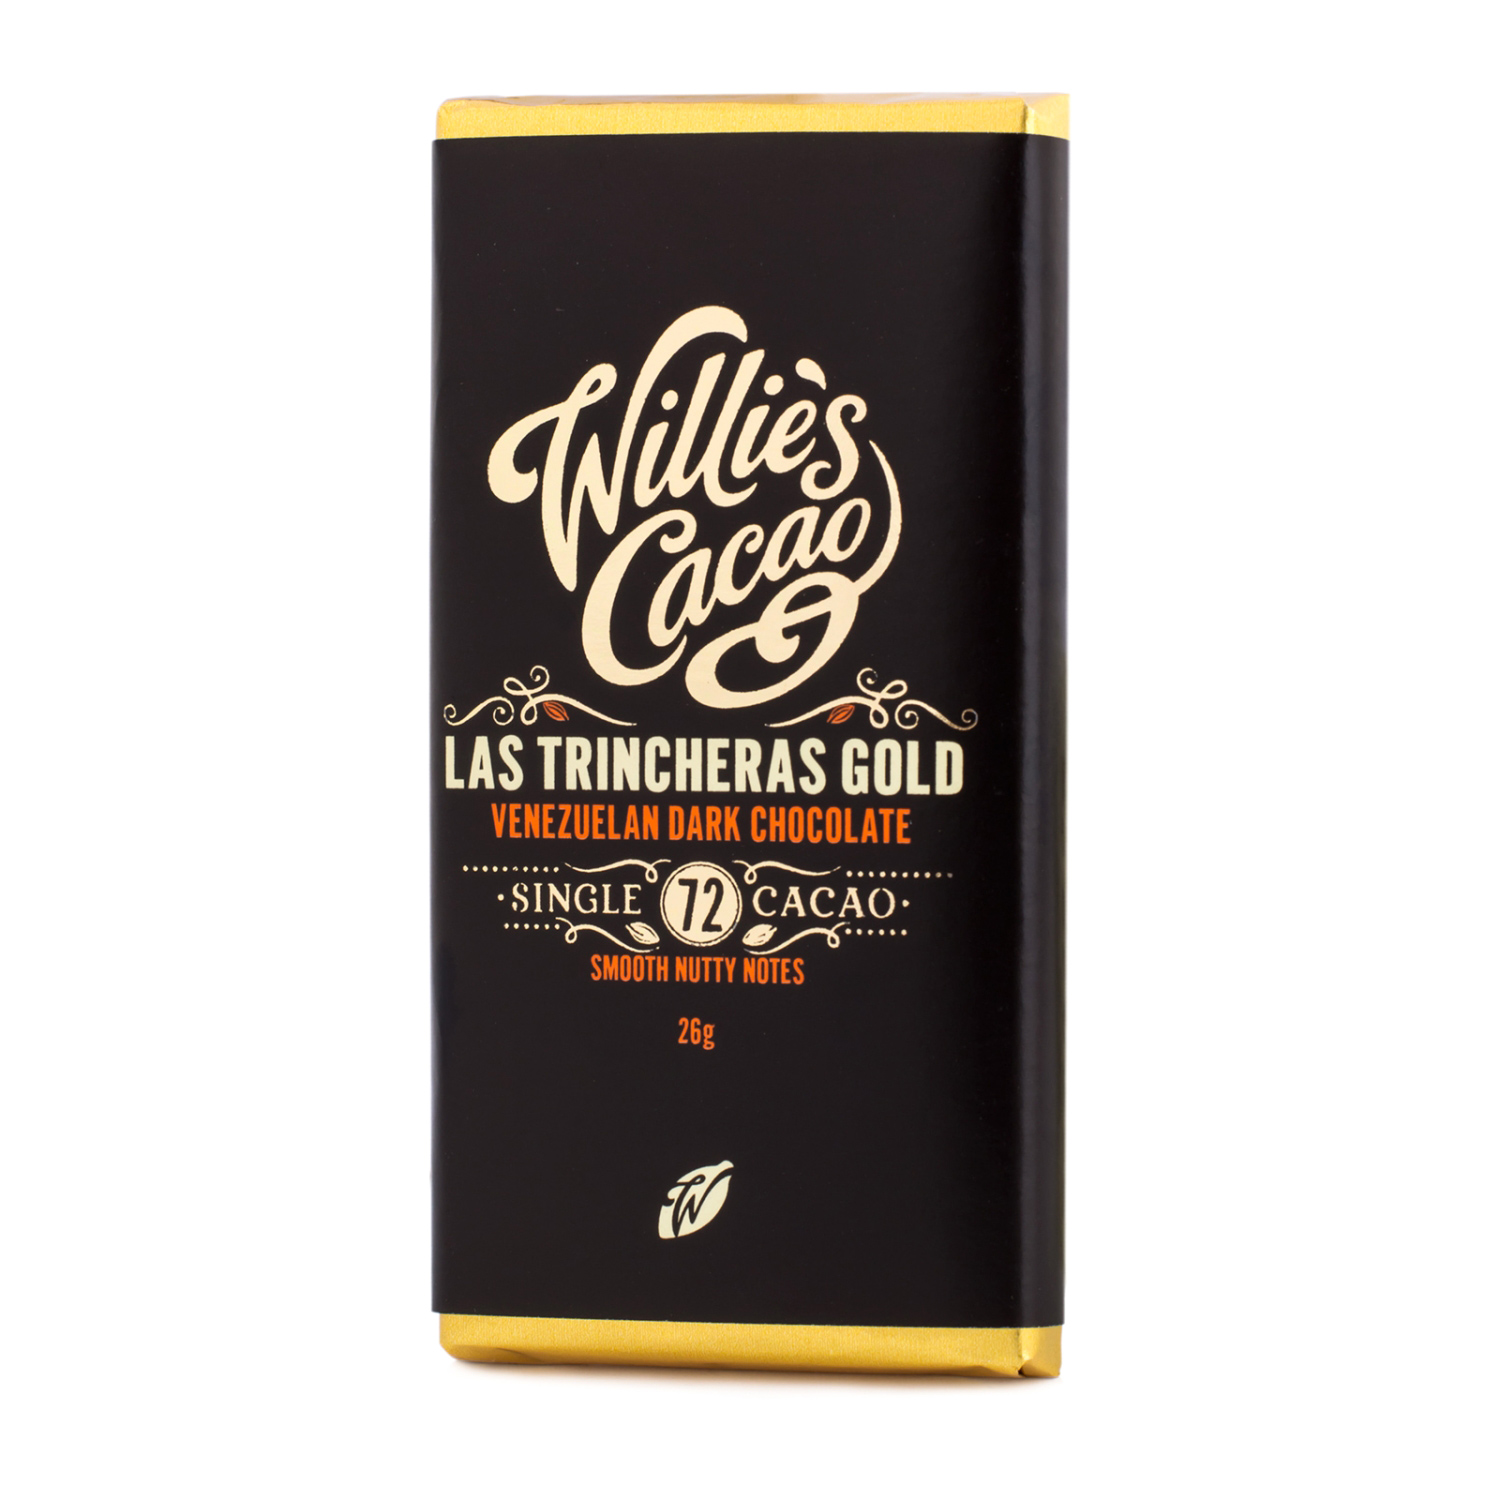 Willie's Cacao - Czekolada 72% - Las Trincheras Gold Wenezuela  26g